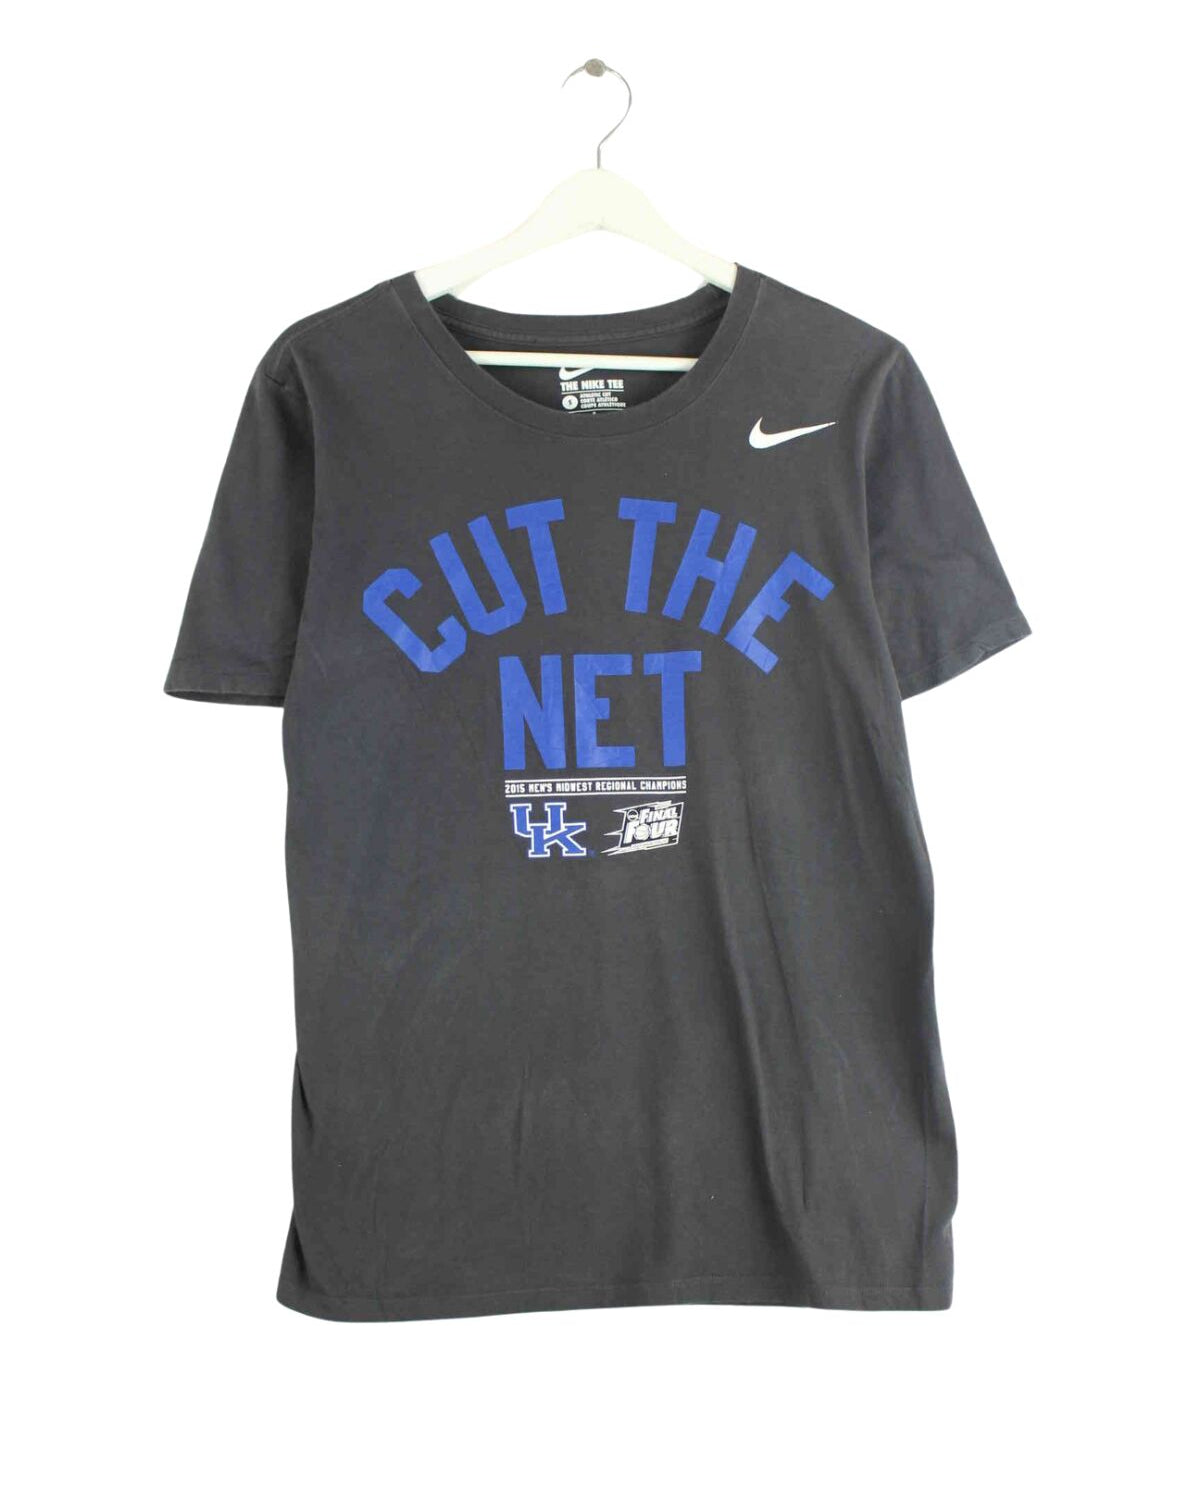 Nike Cut The Net Print T-Shirt Grau S (front image)